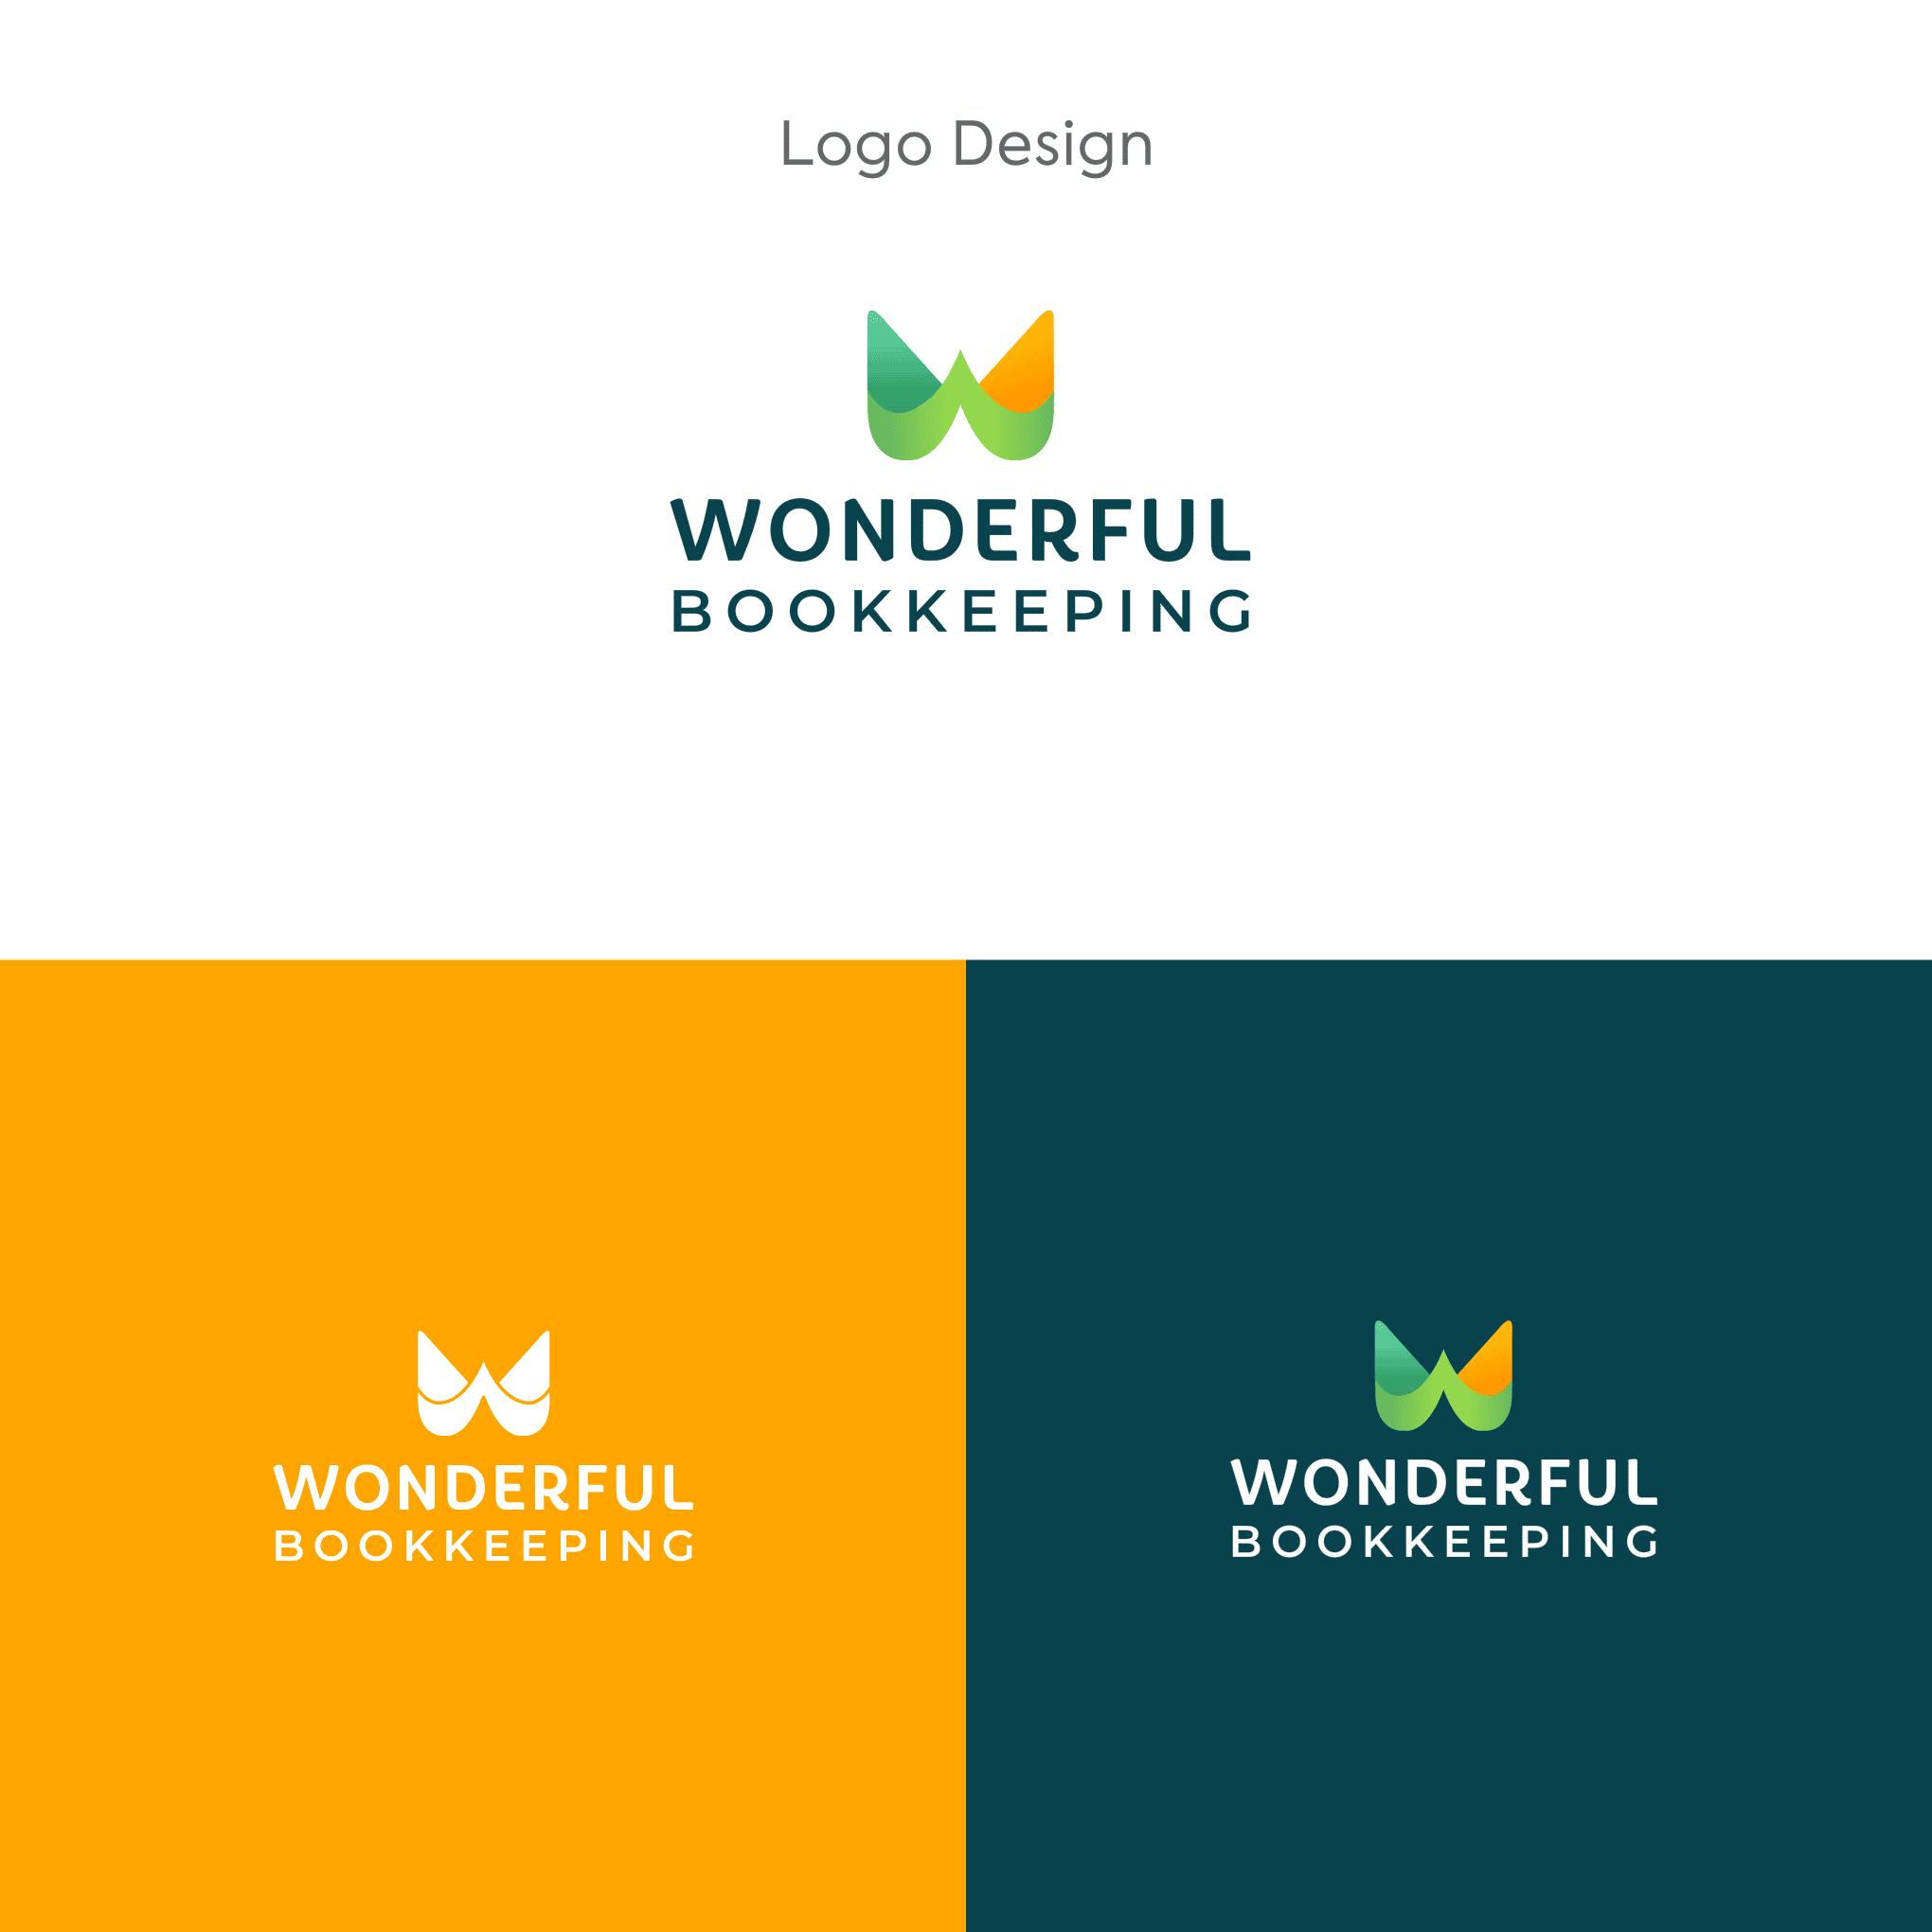 01 - Logo Design (4)